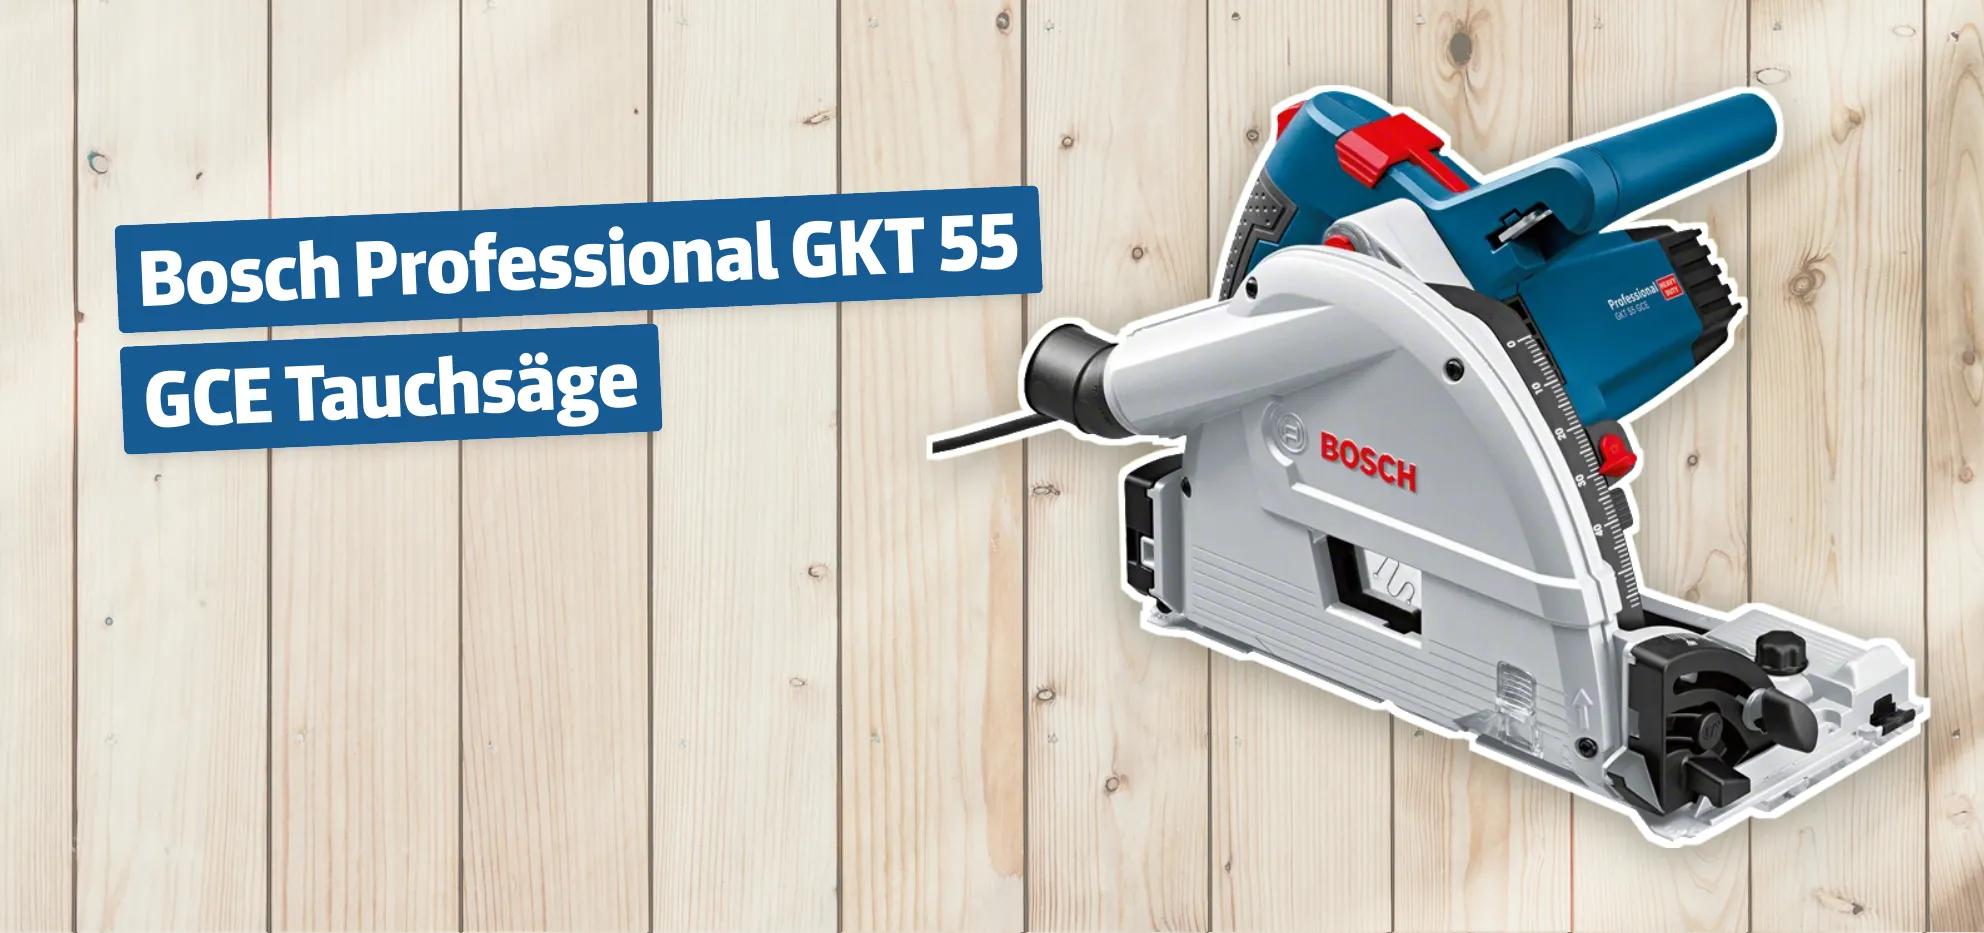 Bosch Professional GKT 55 GCE Tauchsäge